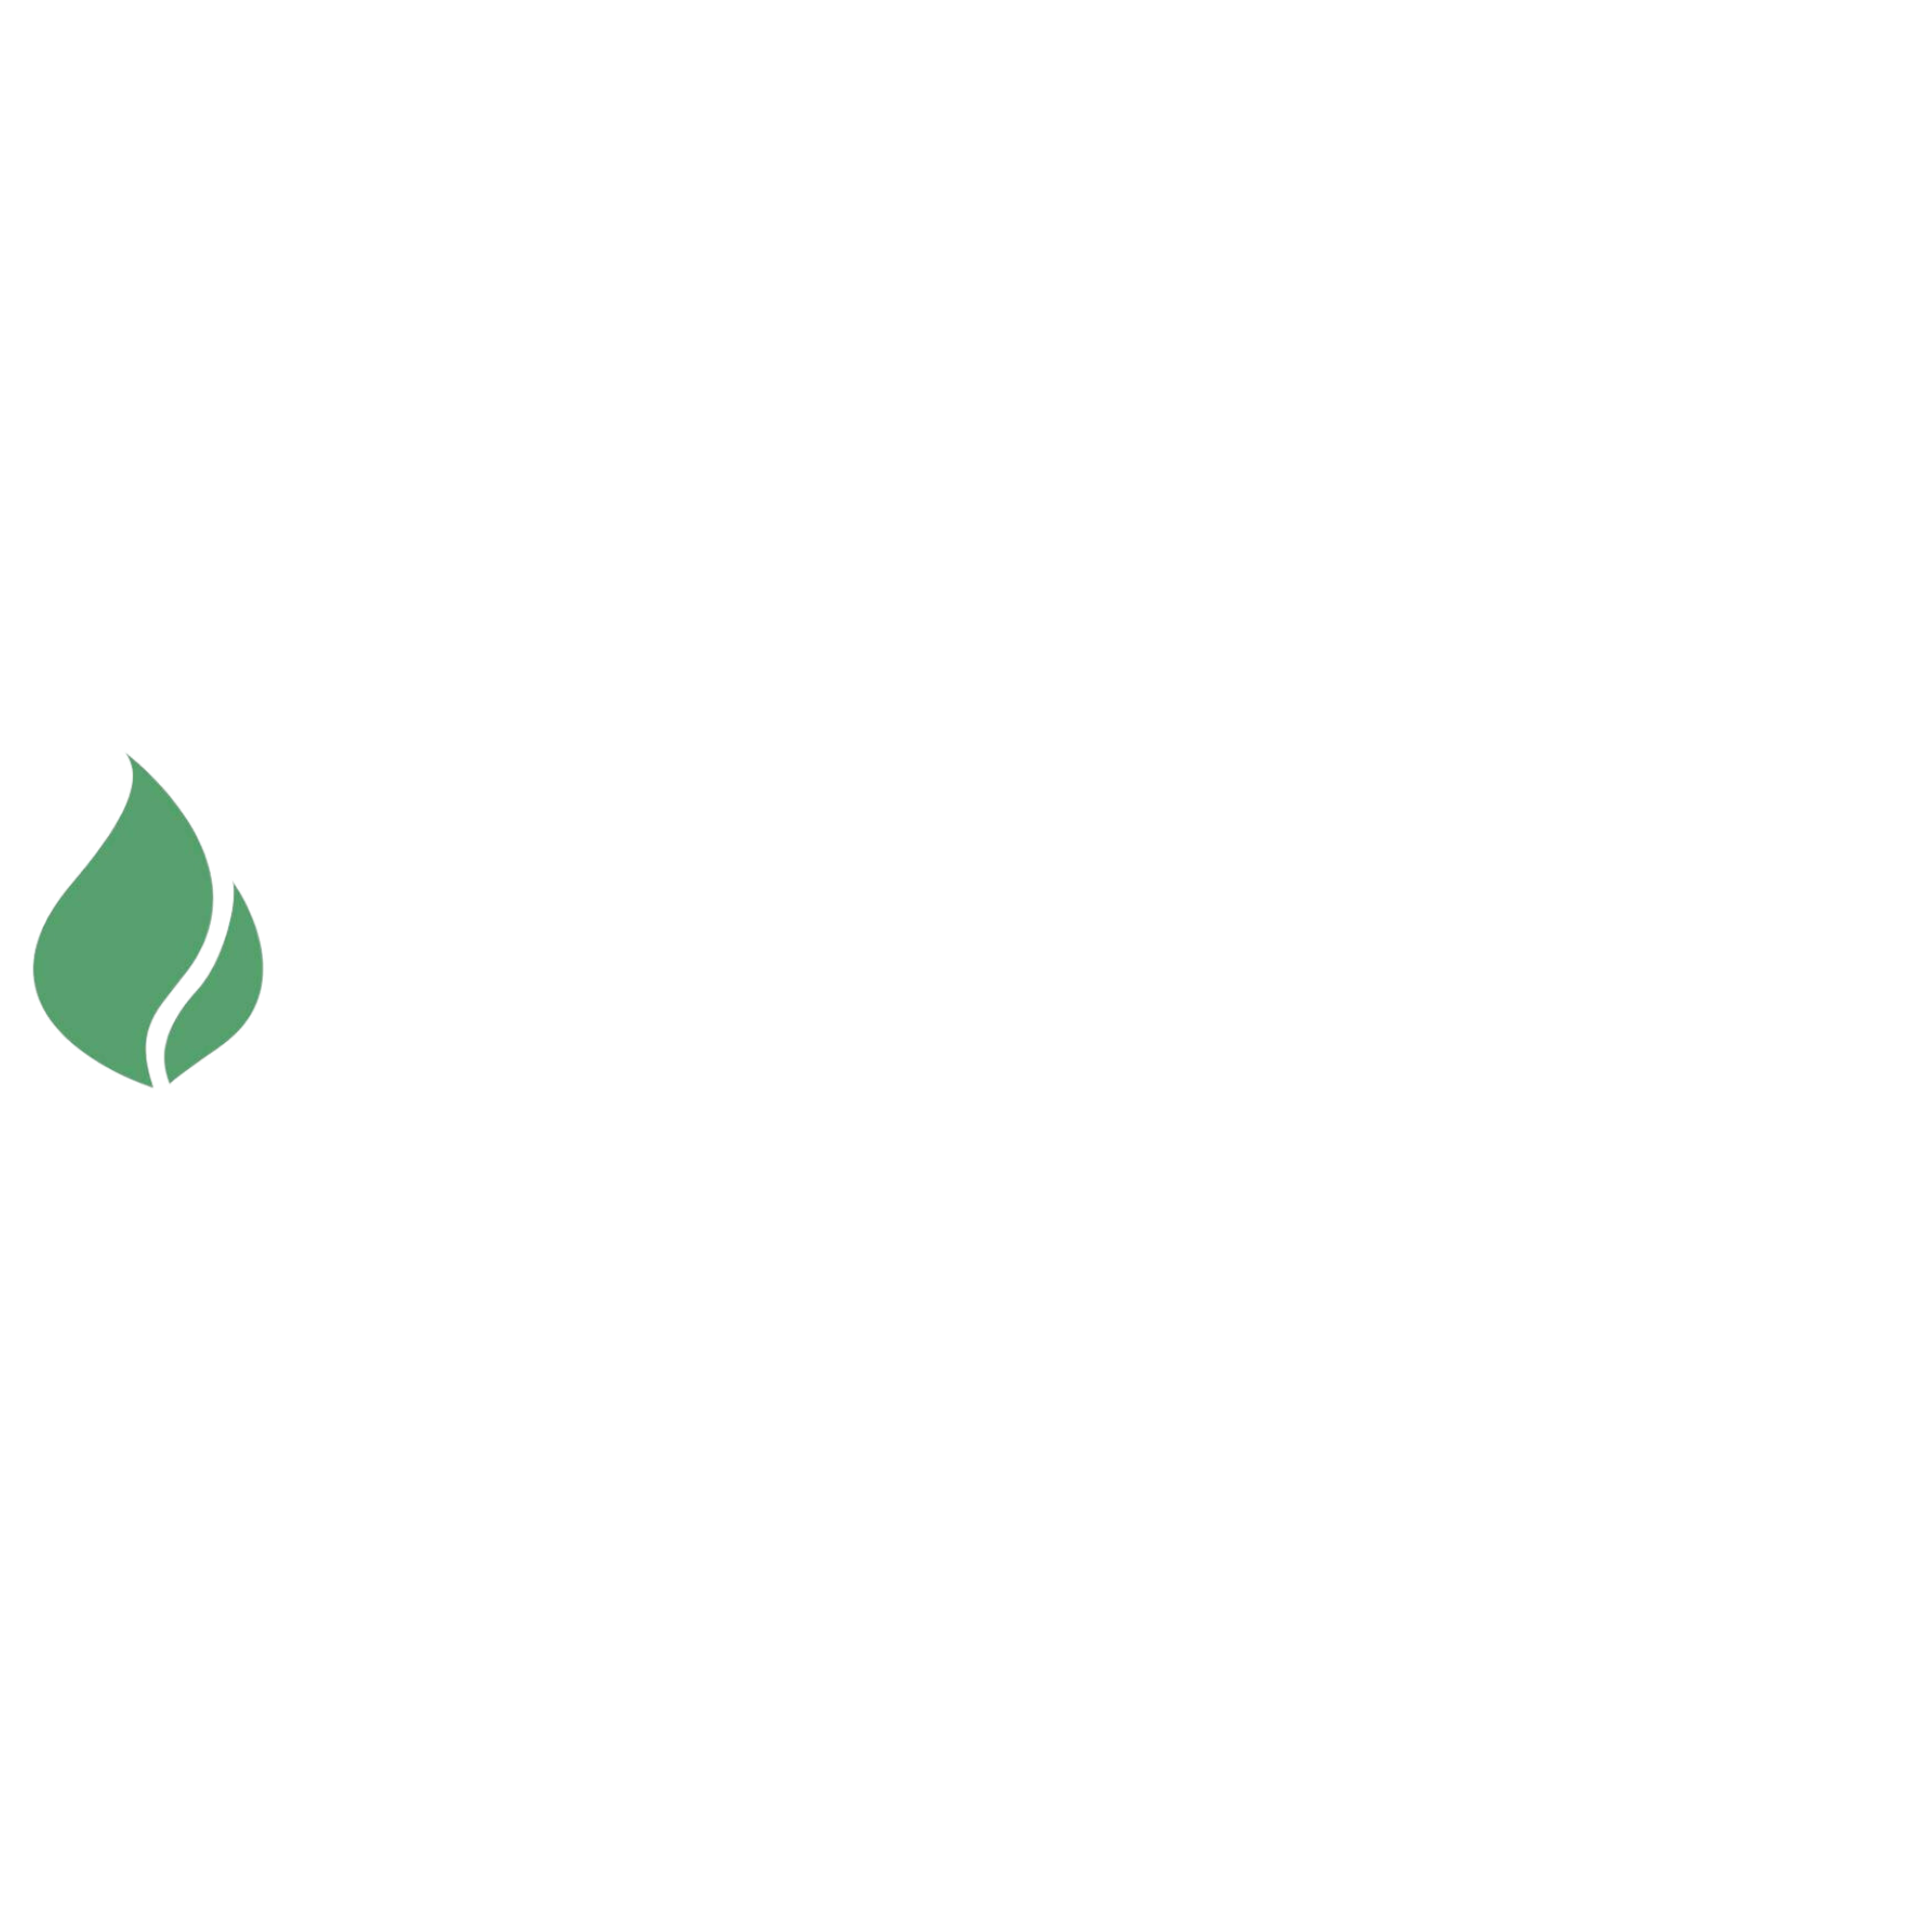 The Bioflame